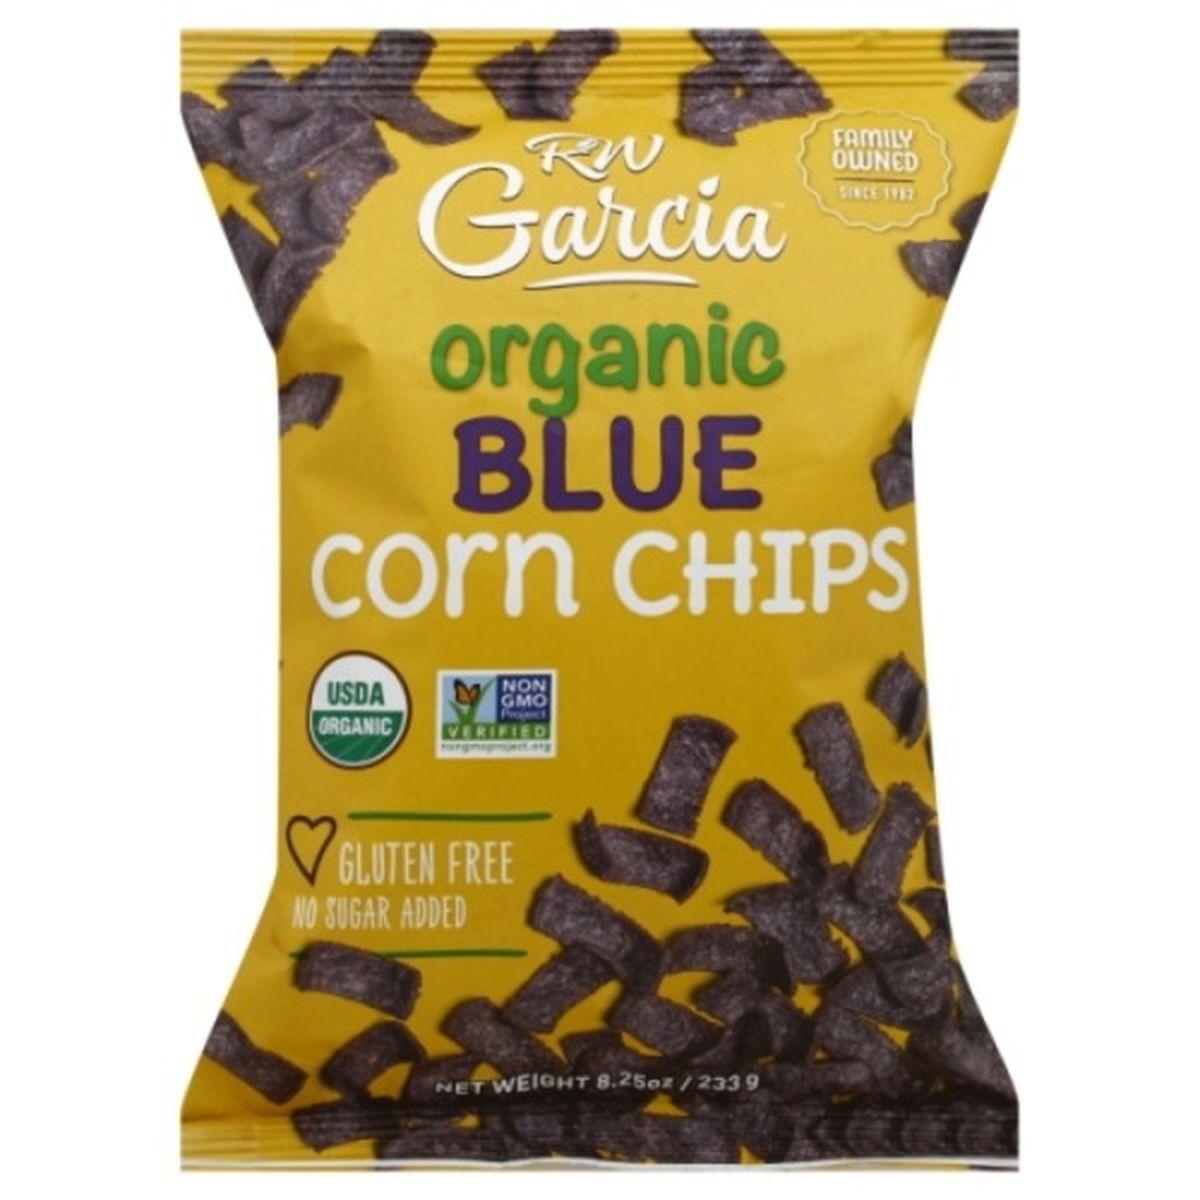 Calories in RW Garcia Corn Chips, Organic, Blue